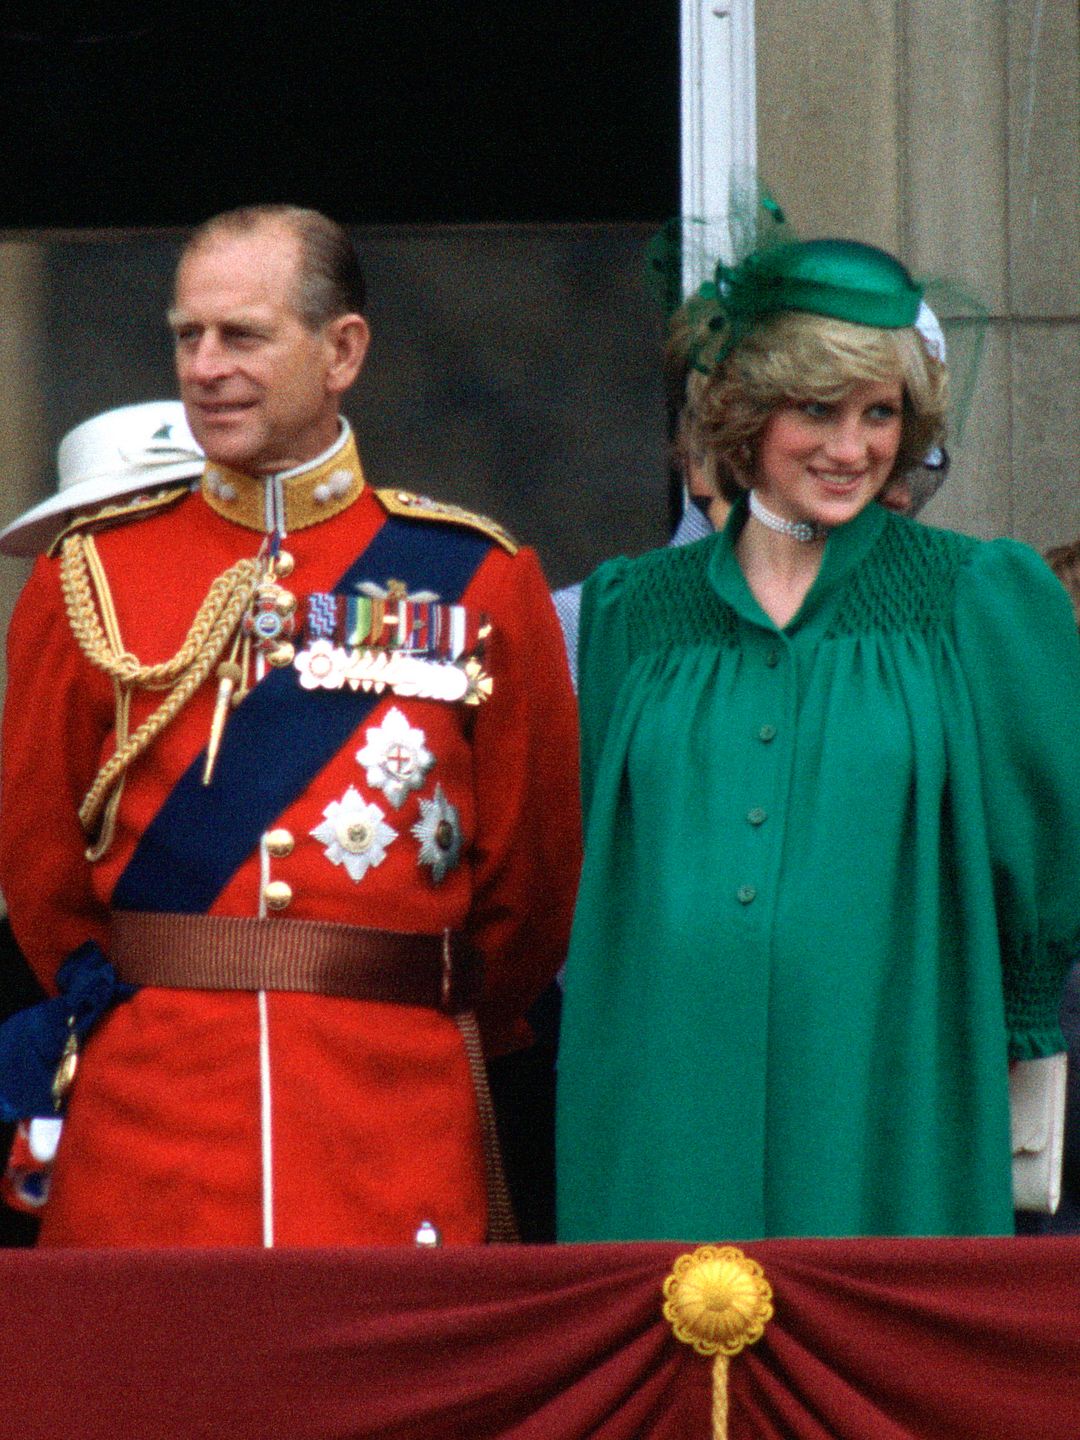 Prince Philip standing next to a pregnant Princess Diana